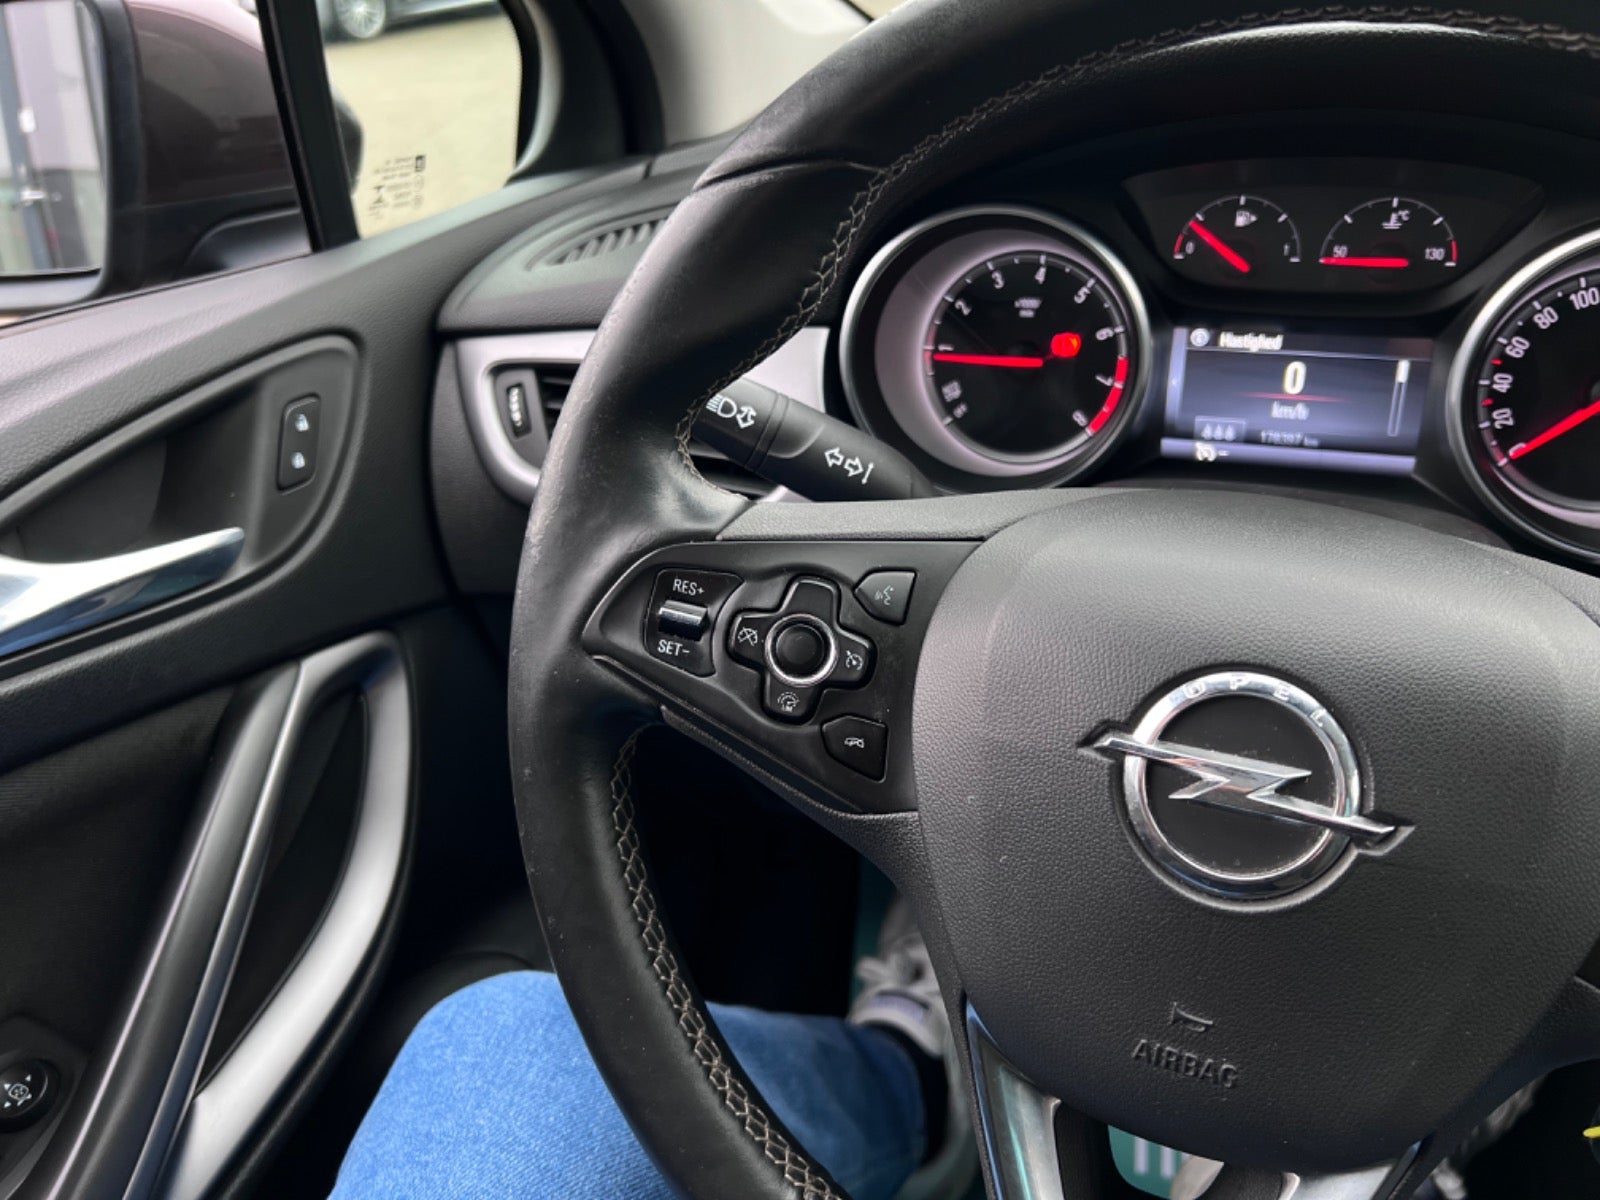 Opel Astra 2015